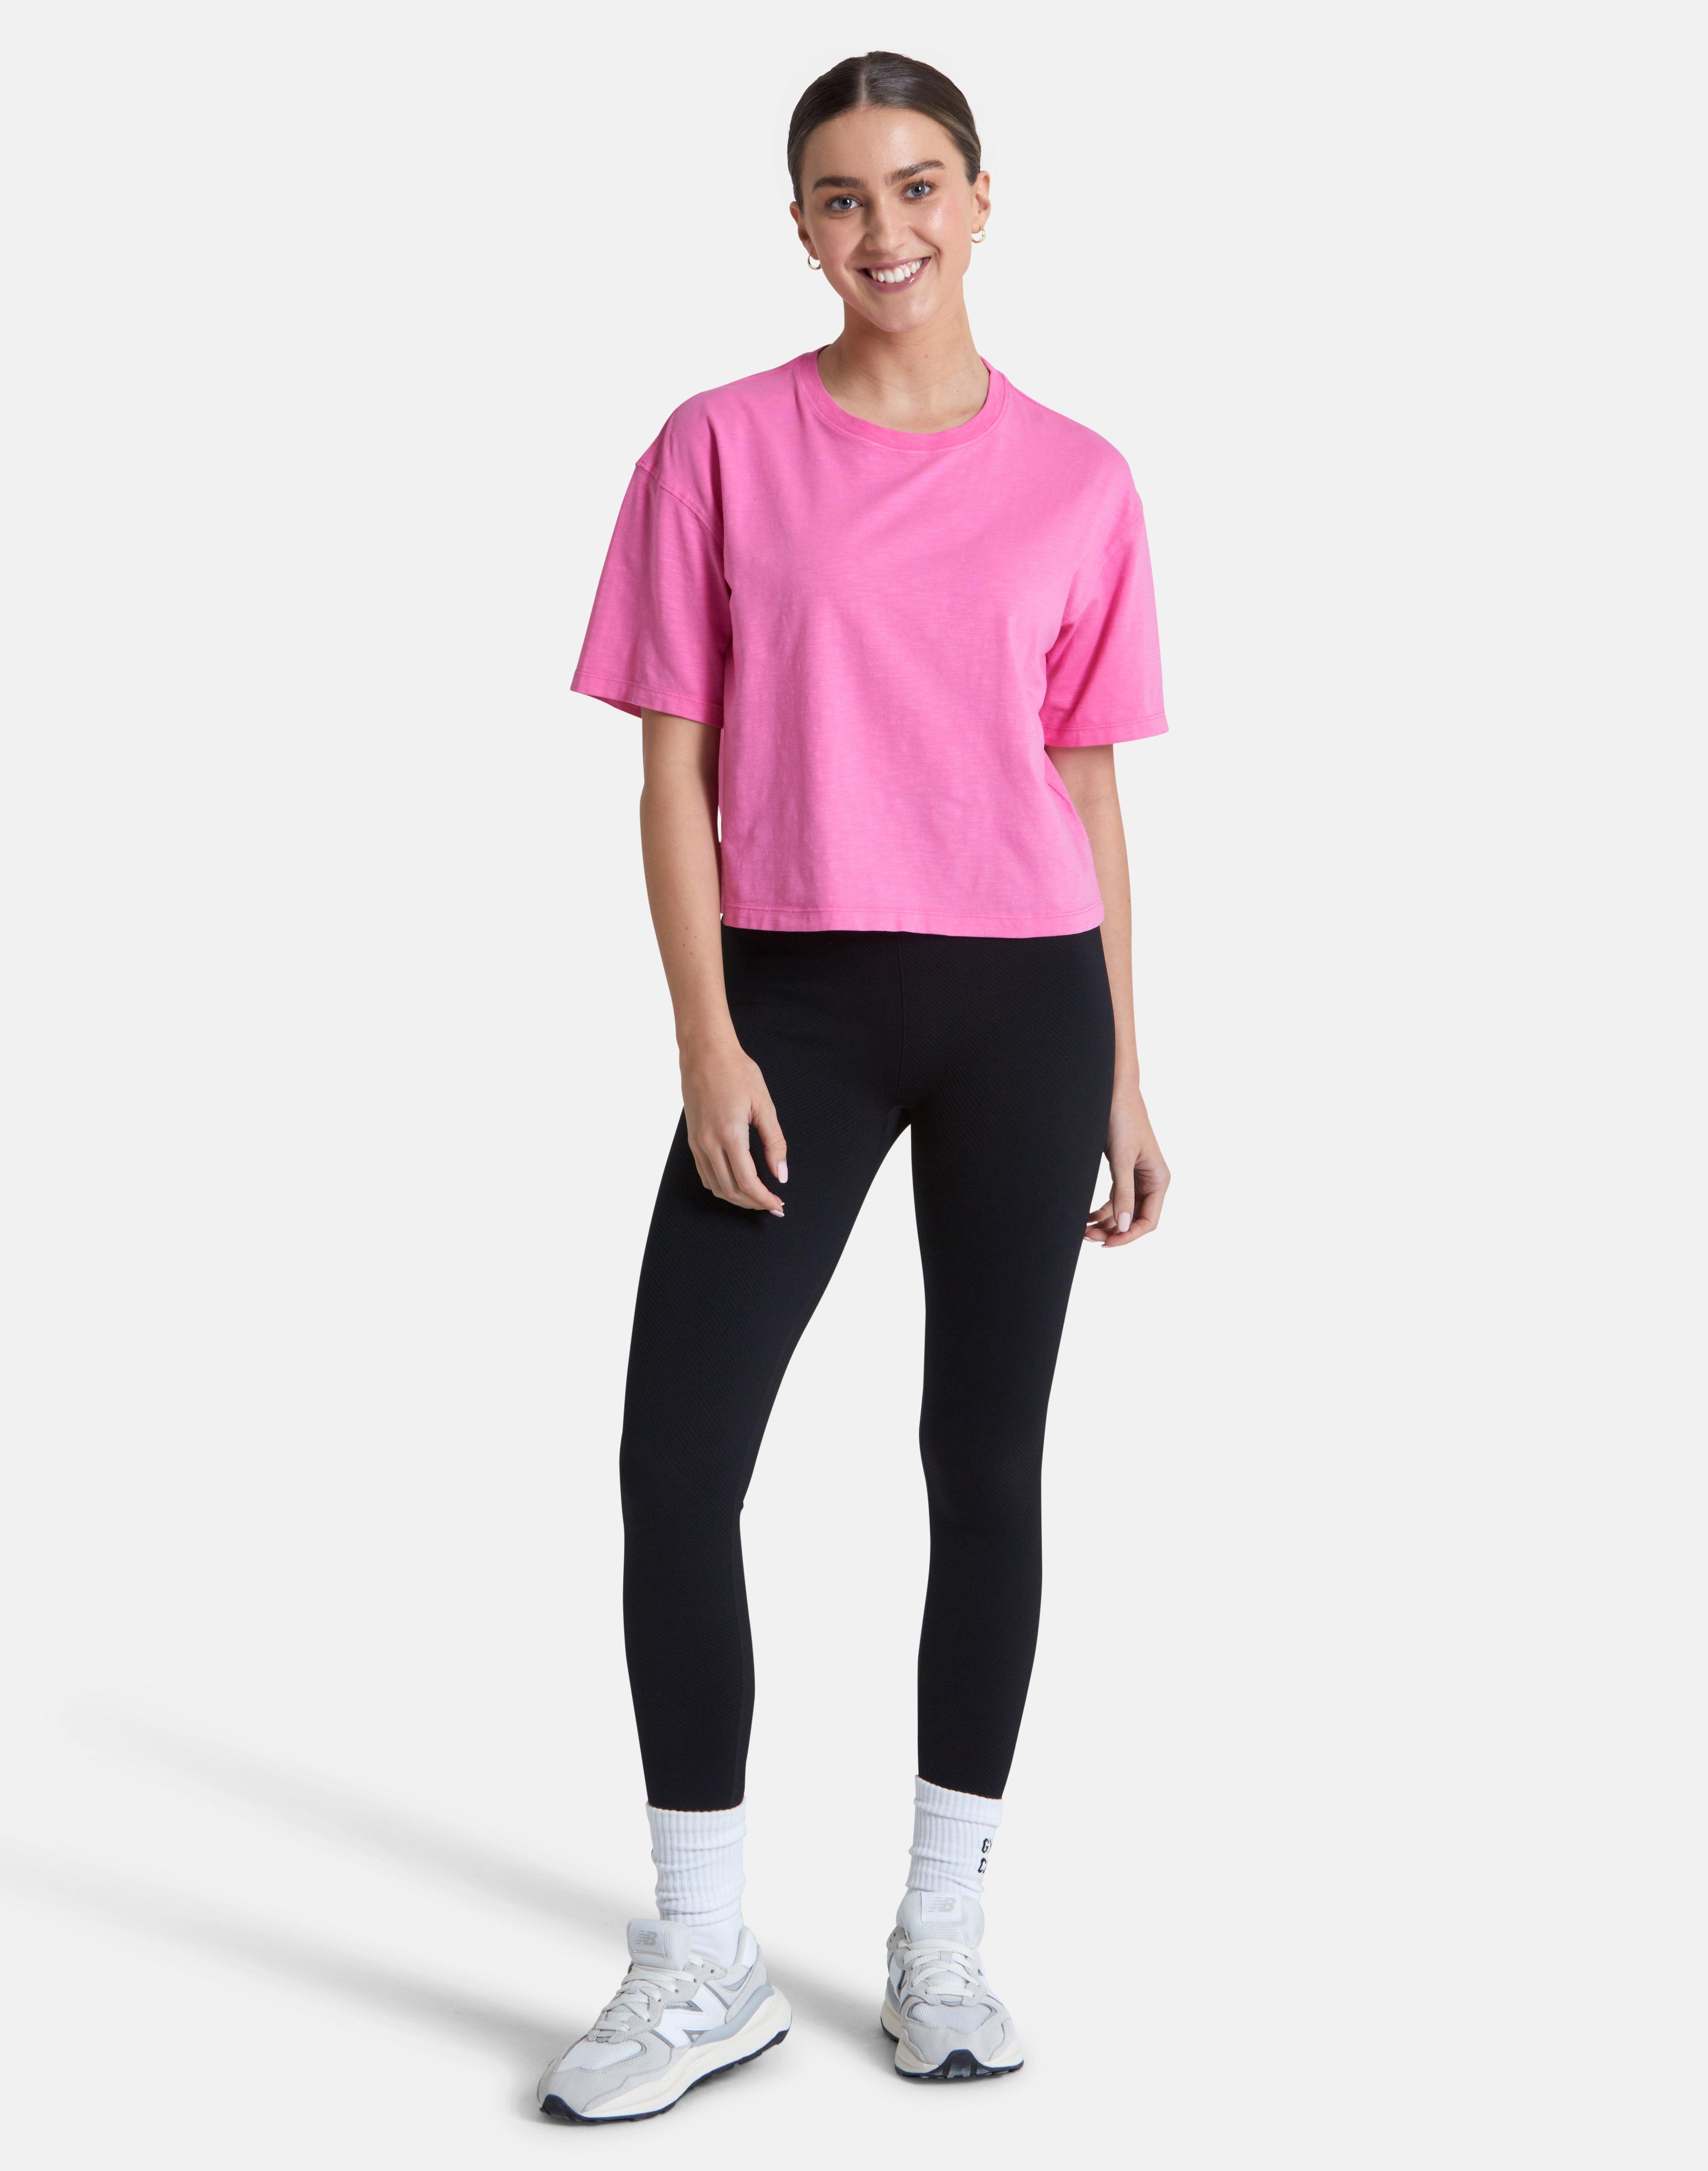 Essential Crop Tee in Empower Pink - T-Shirts - Gym+Coffee